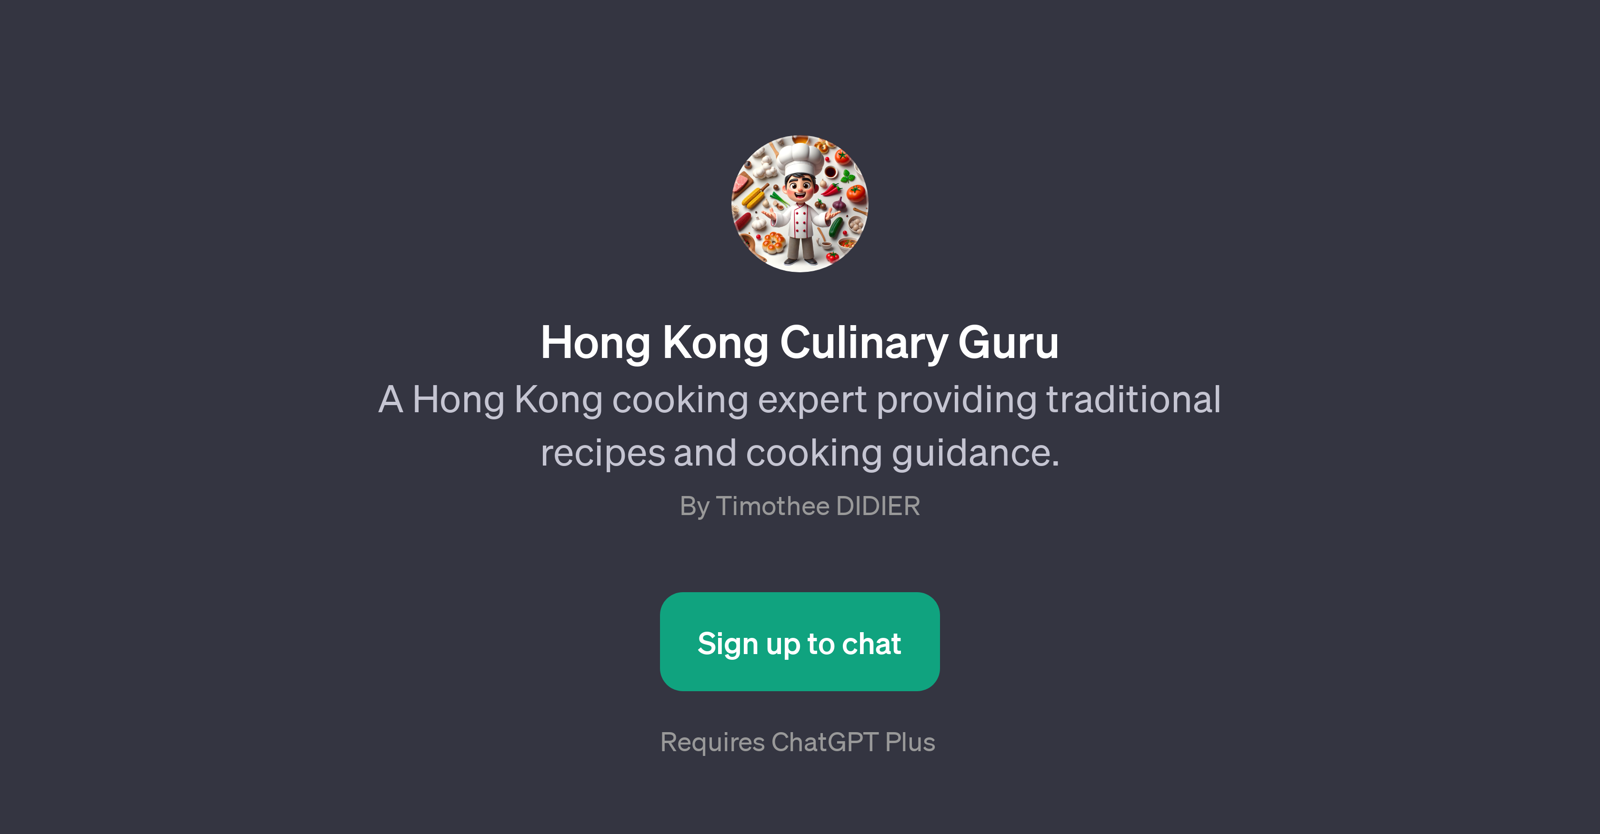 Hong Kong Culinary Guru website